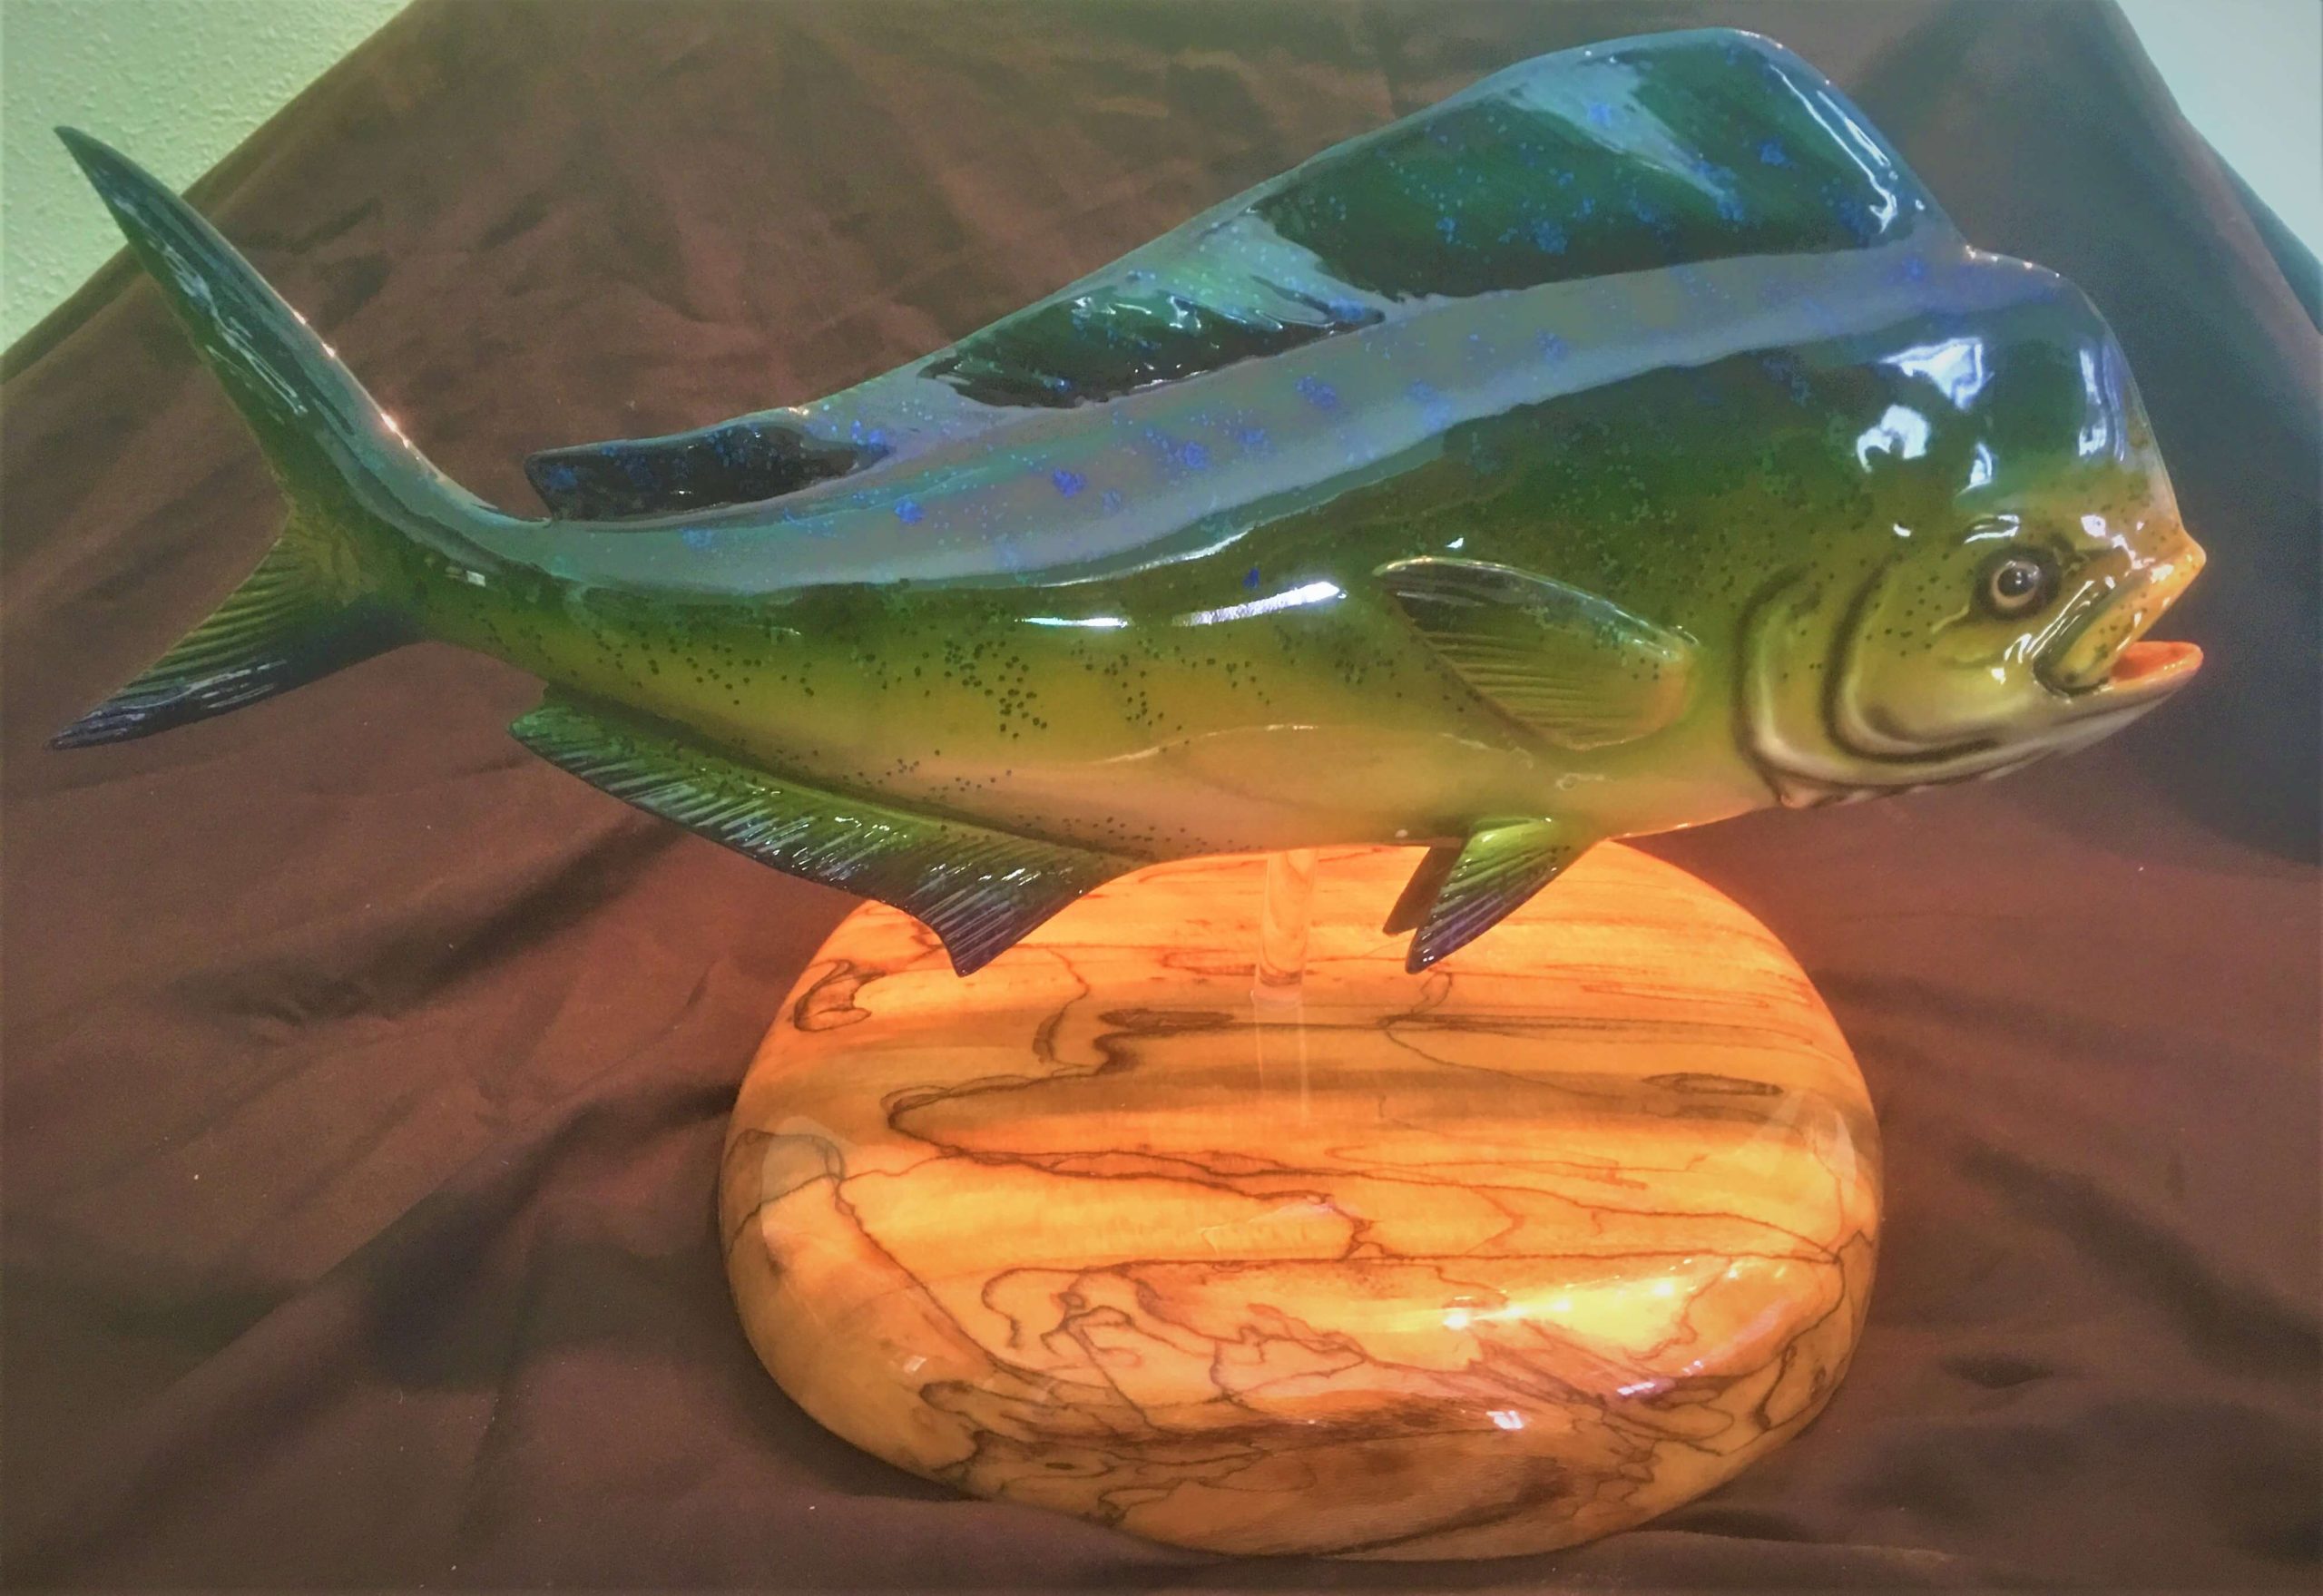 Full Mount Mahi/Dorado/Dolphin Fish Wood Trophy Carving/Sculpture